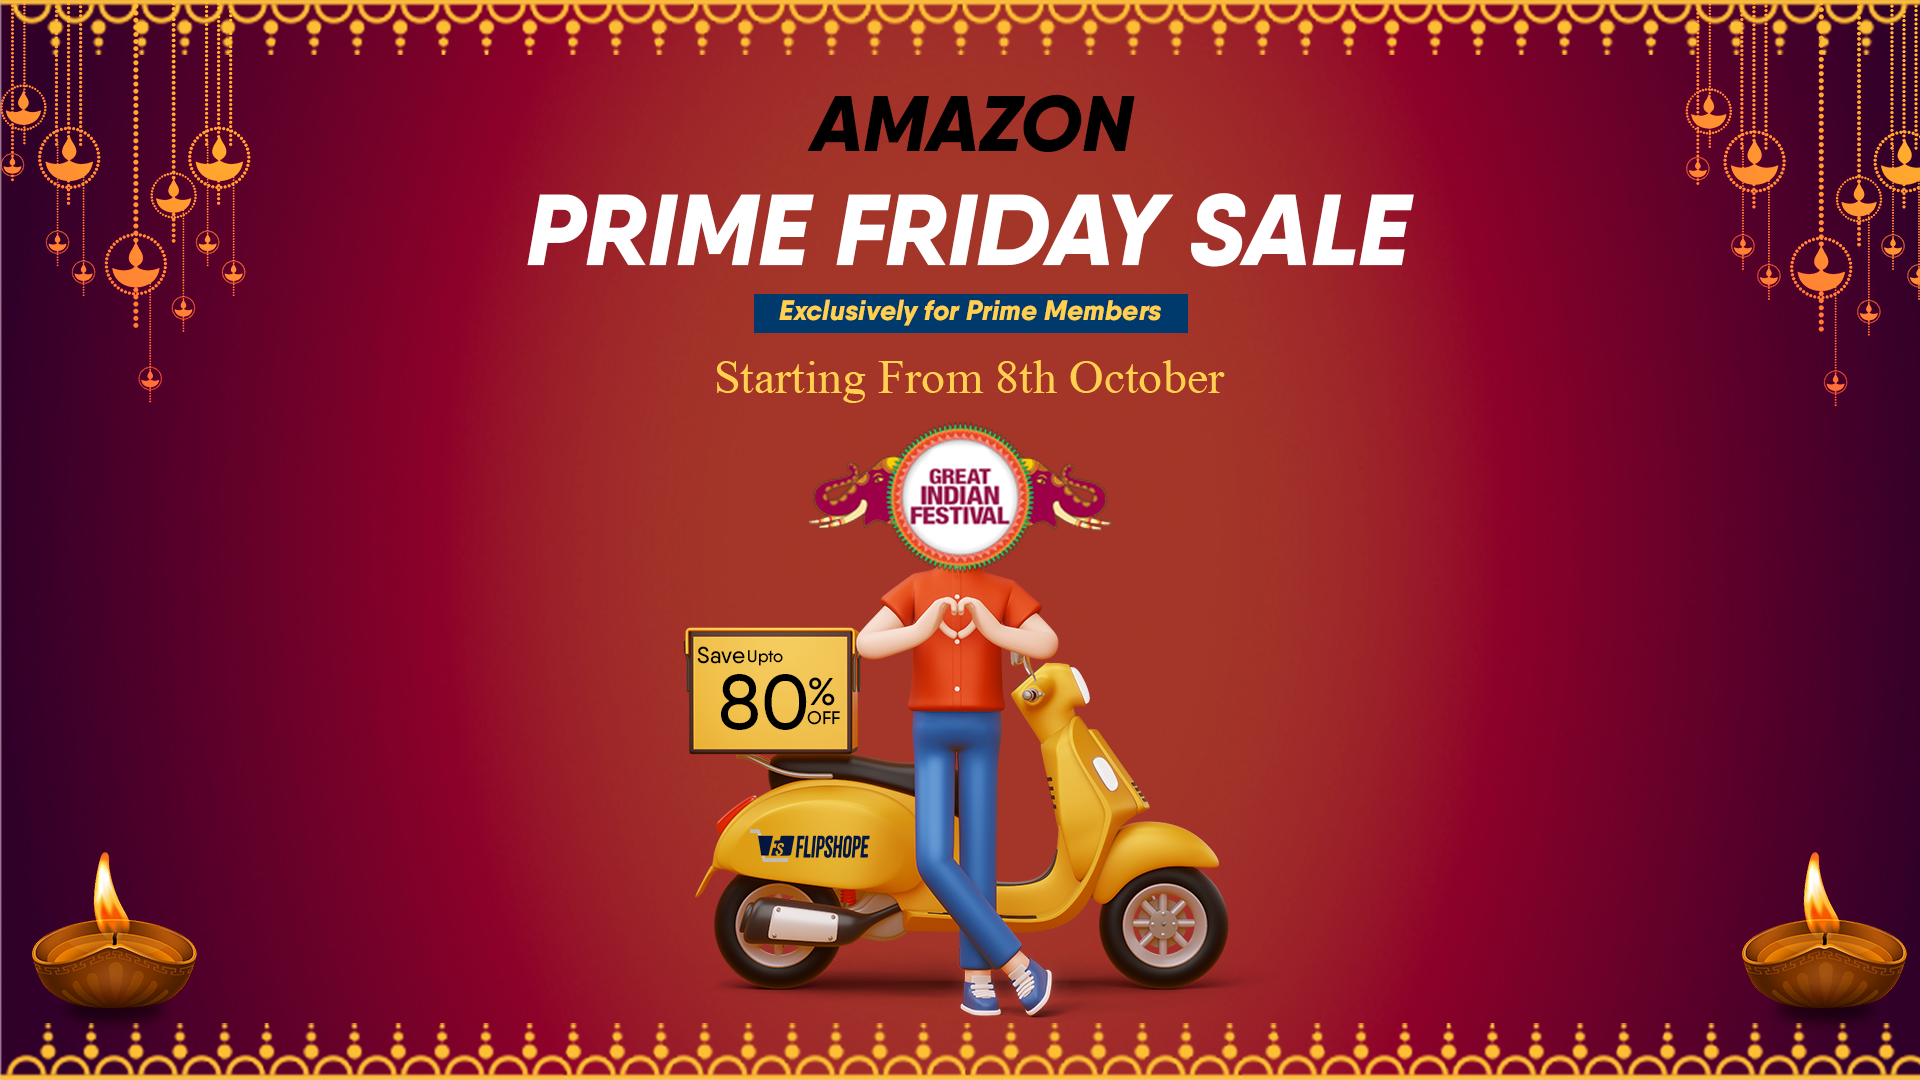 Amazon Prime Friday